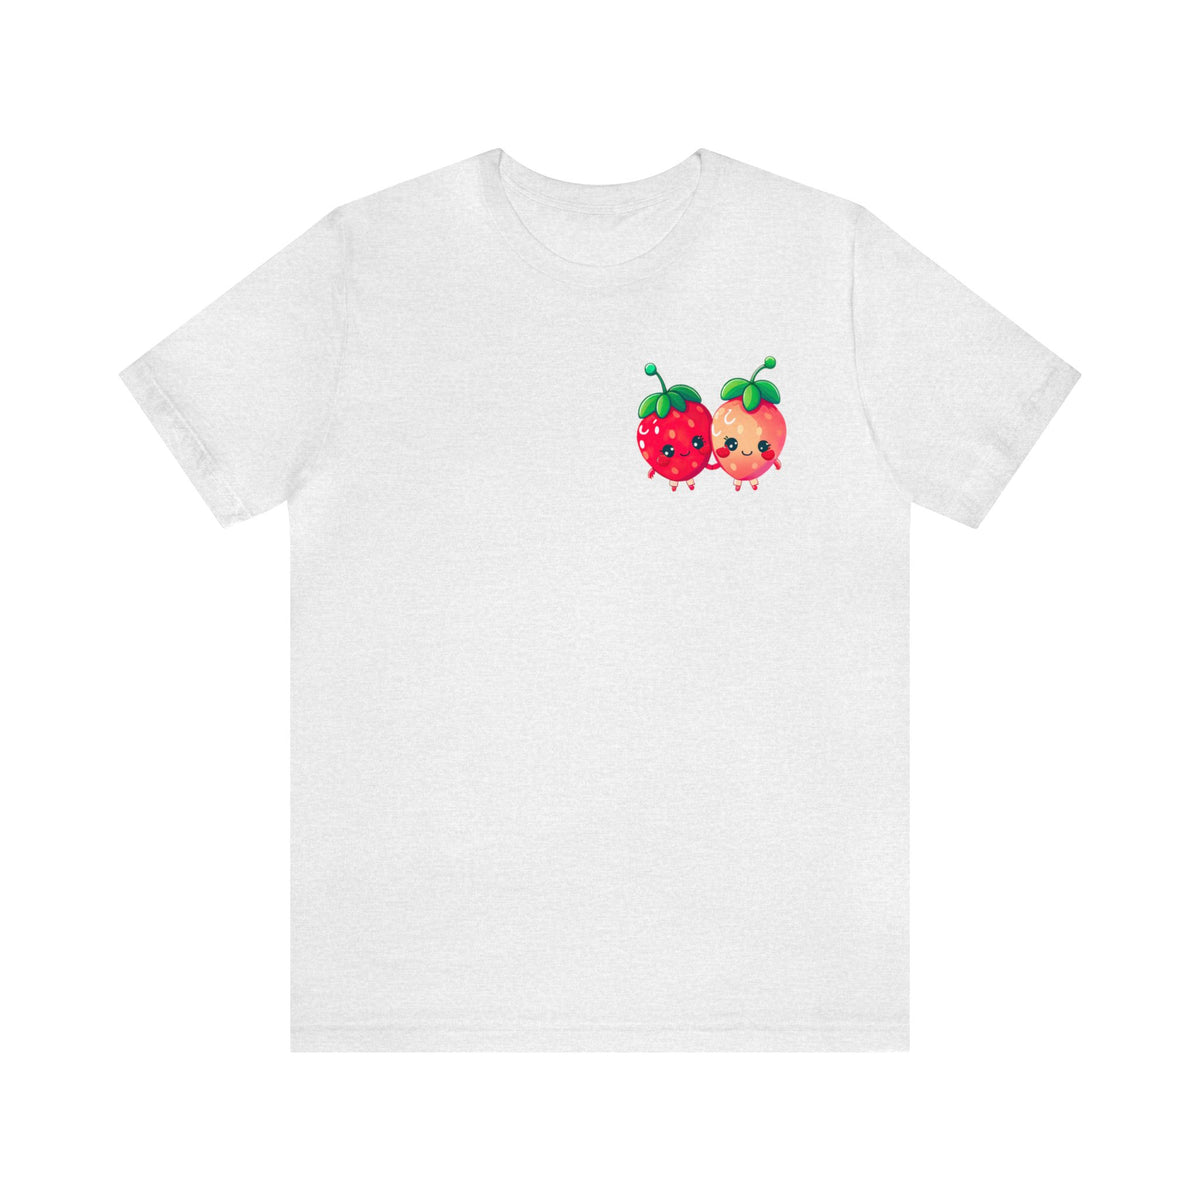 Cute Strawberry Shirt | Strawberry Pocket Tshirt | Aesthetic Fruit Shirt | Kawaii Shirt | Super Soft Unisex Jersey T-shirt